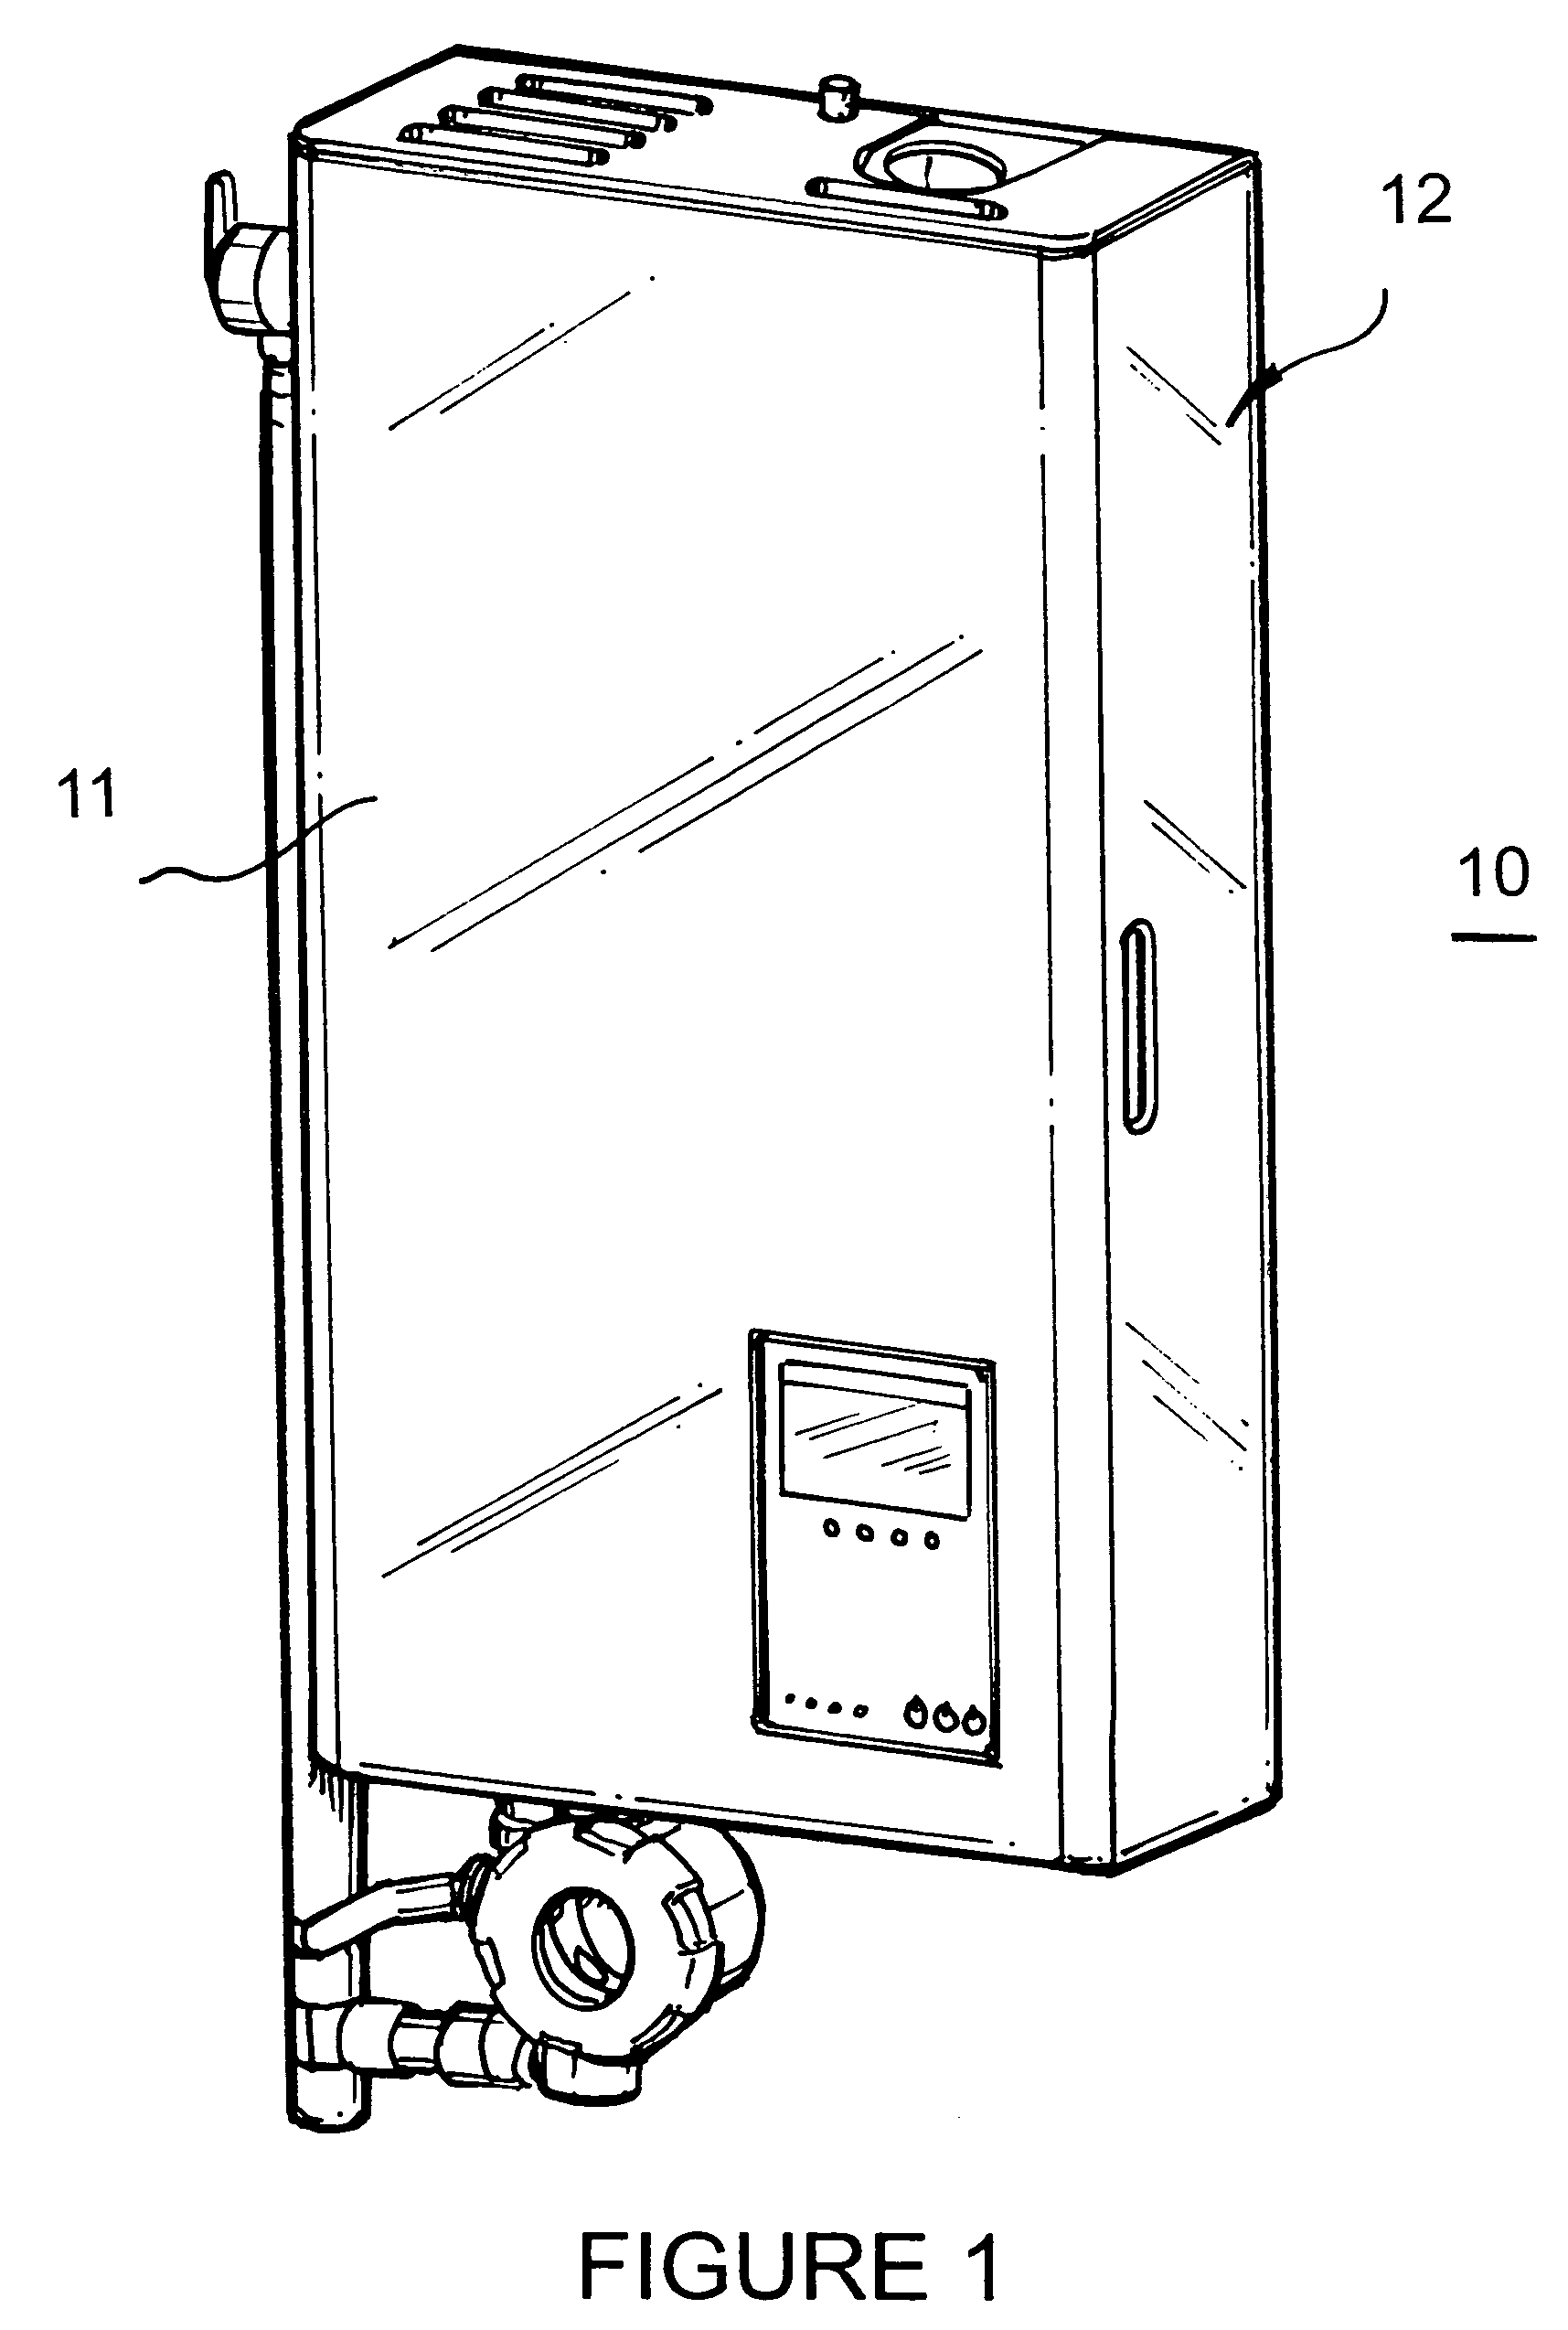 Modular tankless water heater